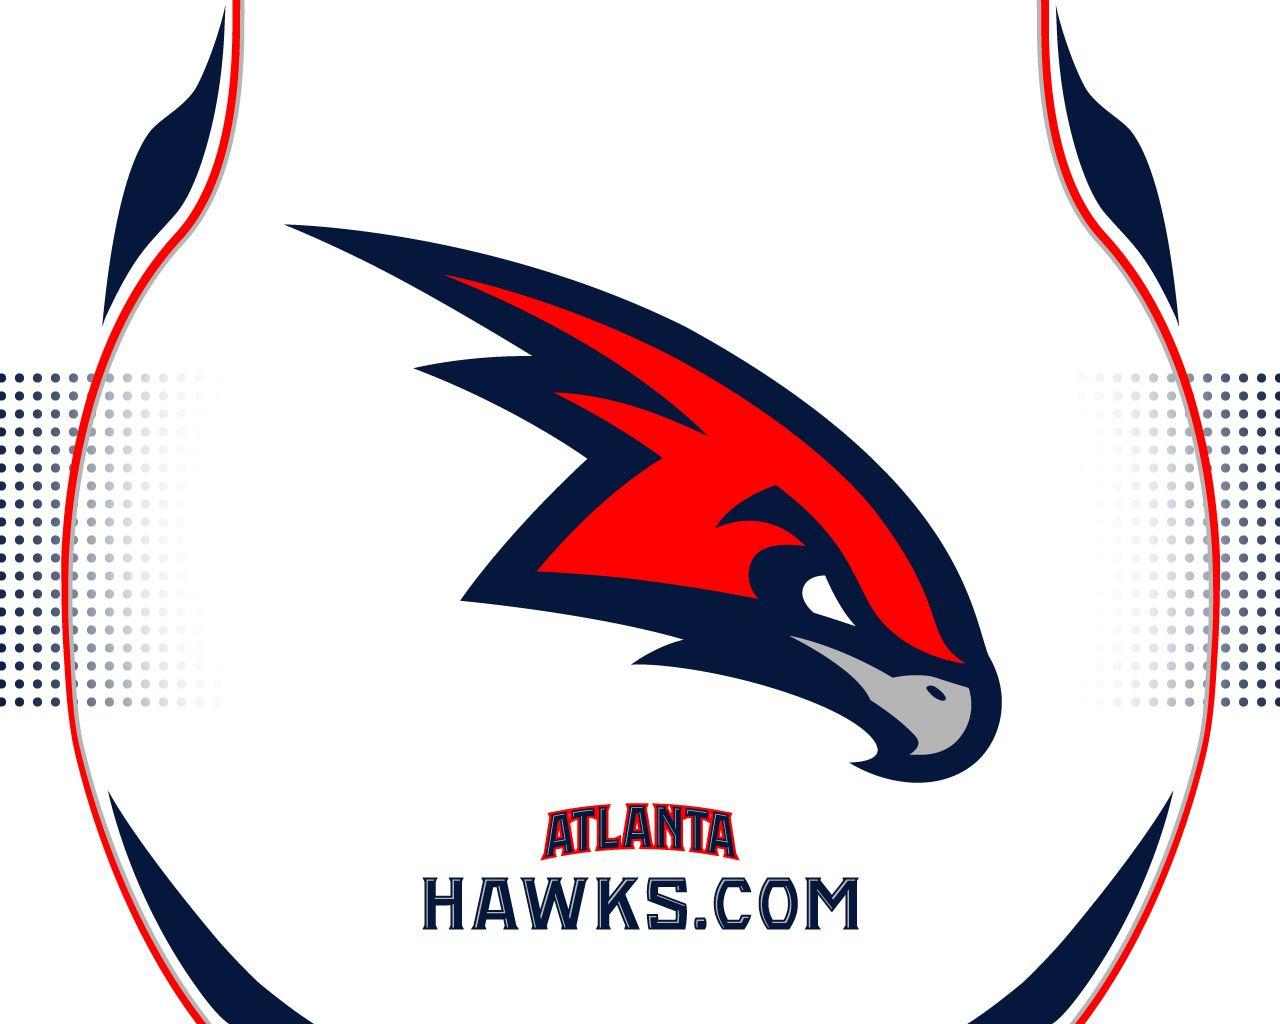 Atlanta Basketball Logo - Atlanta Hawks Wallpapers, Chrome Themes & More for the Biggest Fans ...